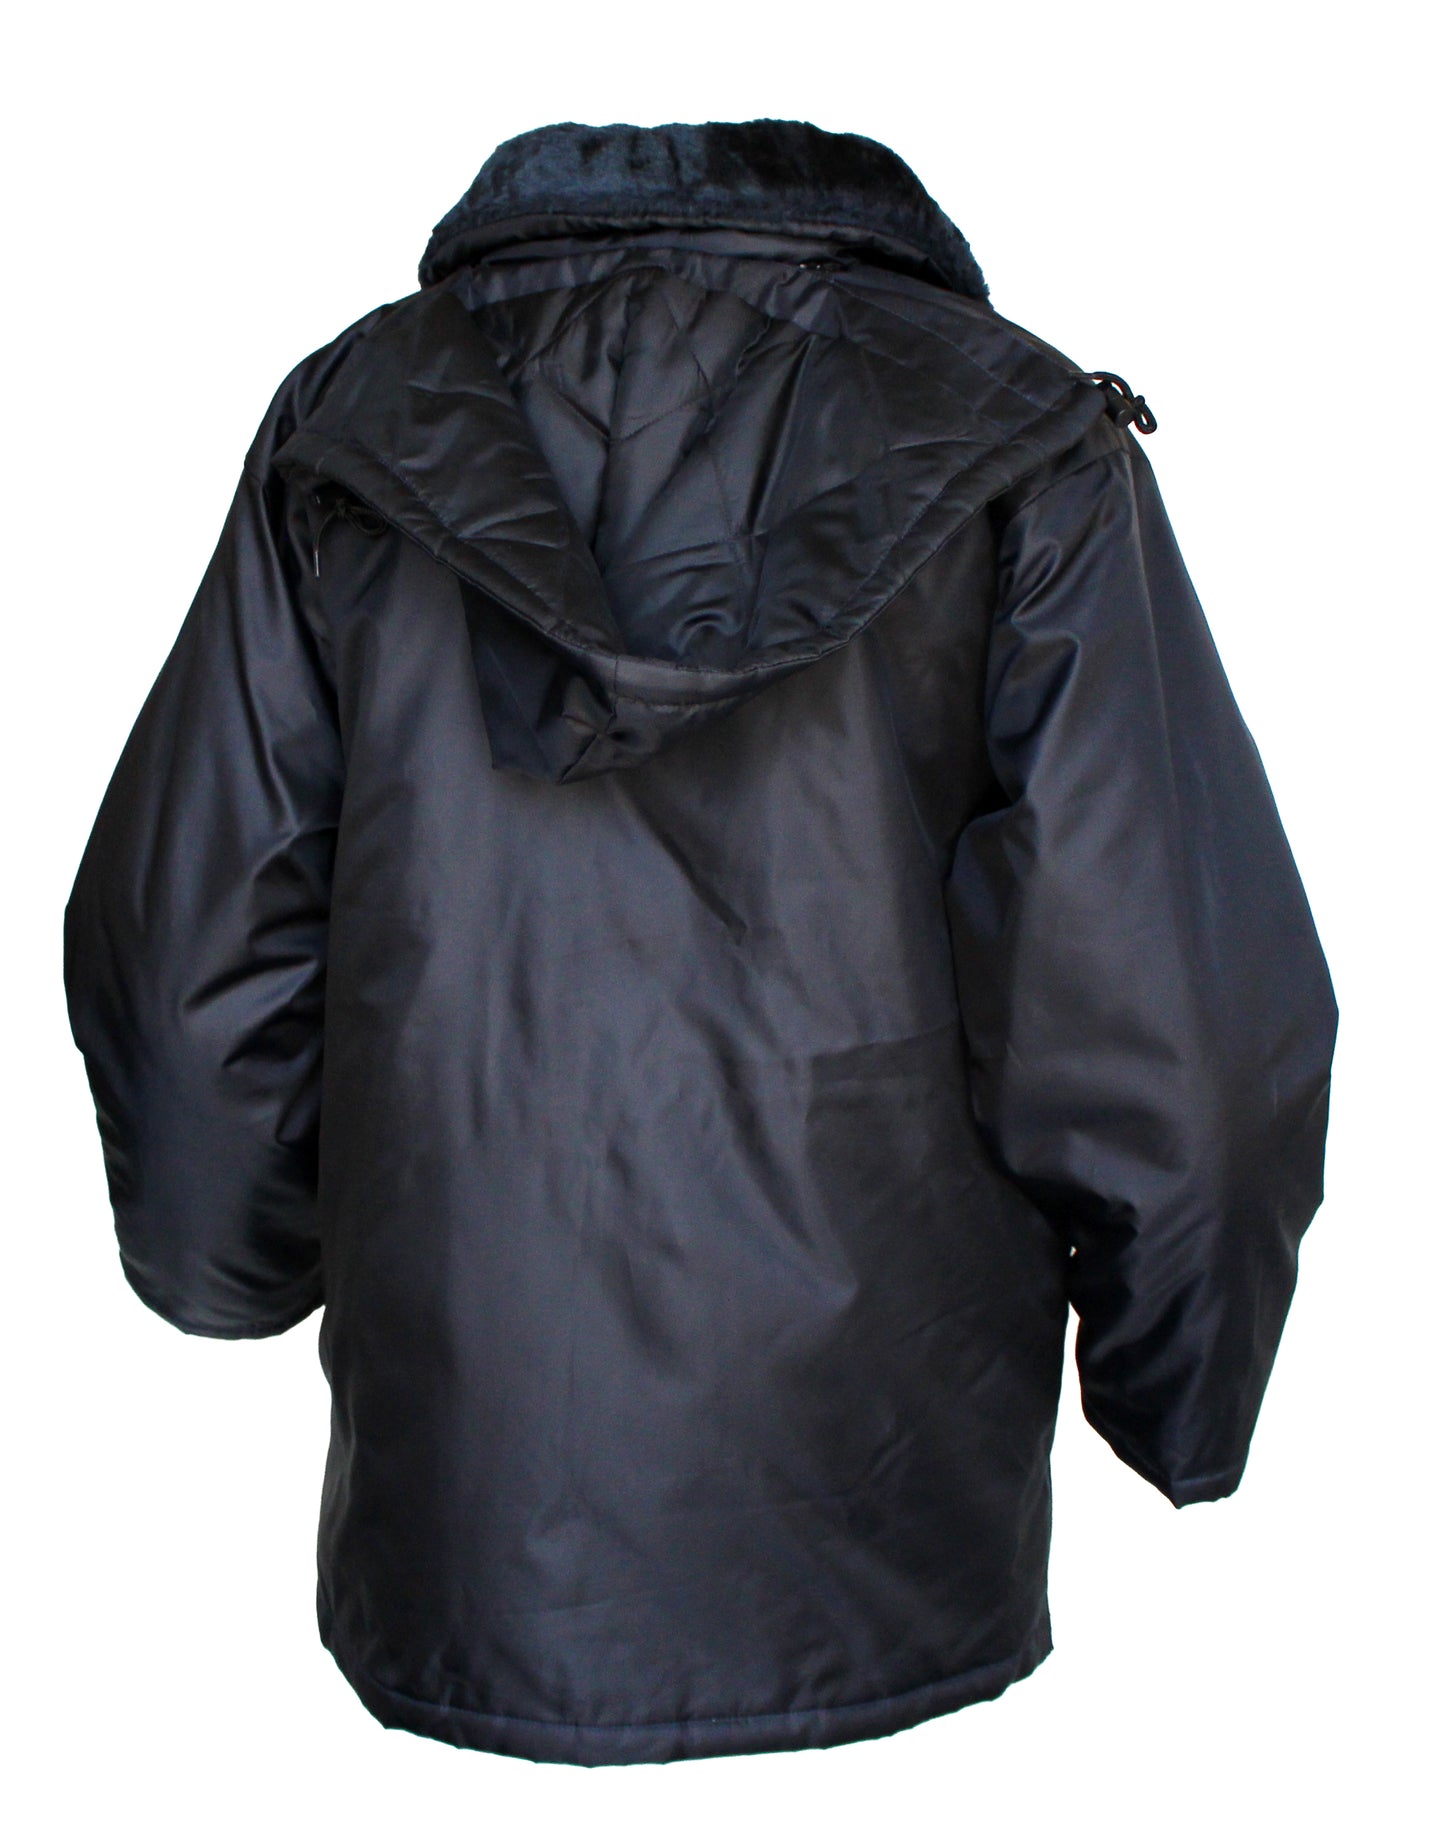 Solar 1 Clothing Nylon Secuirty Parka Duty Jacket 921R